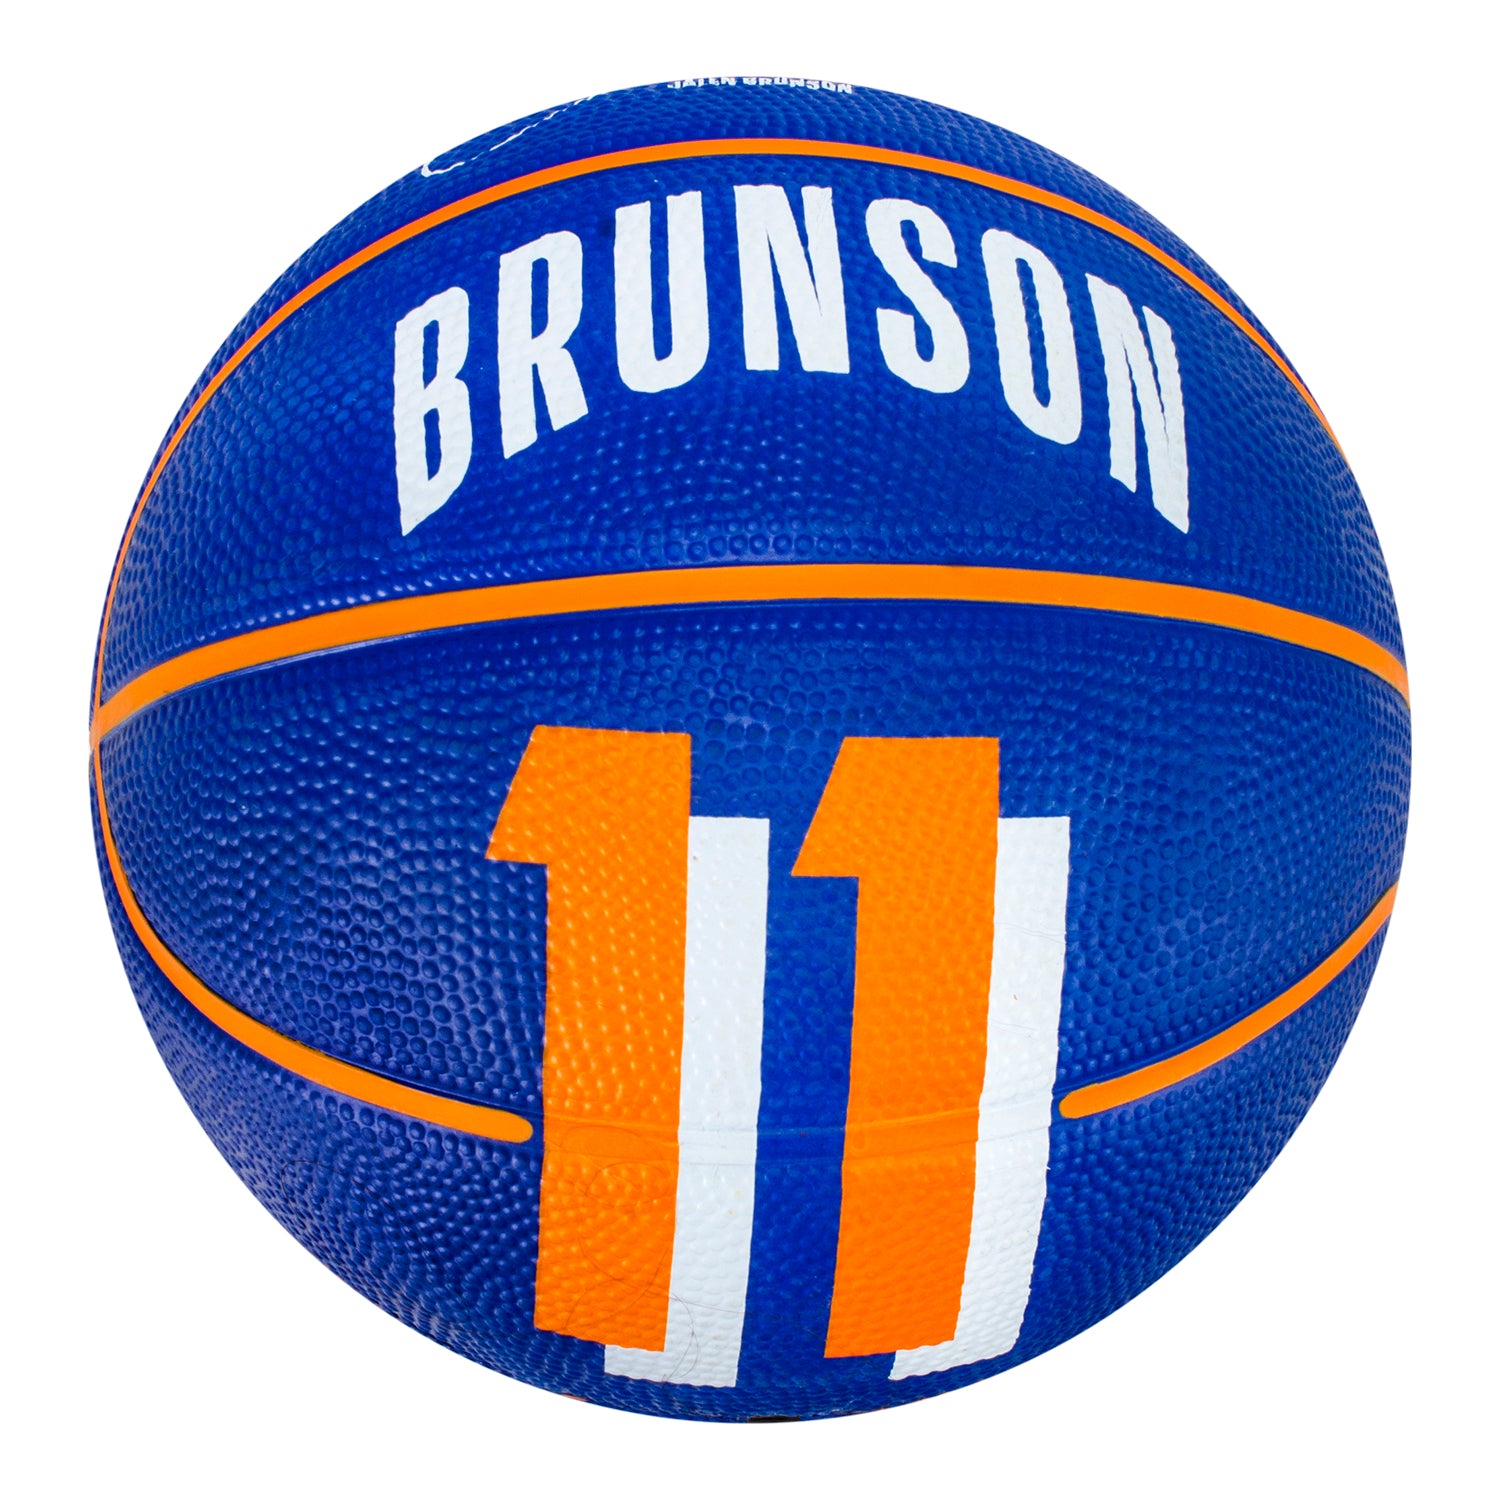 Wilson Brunson Icon Name & Number Mini Basketball - Main View